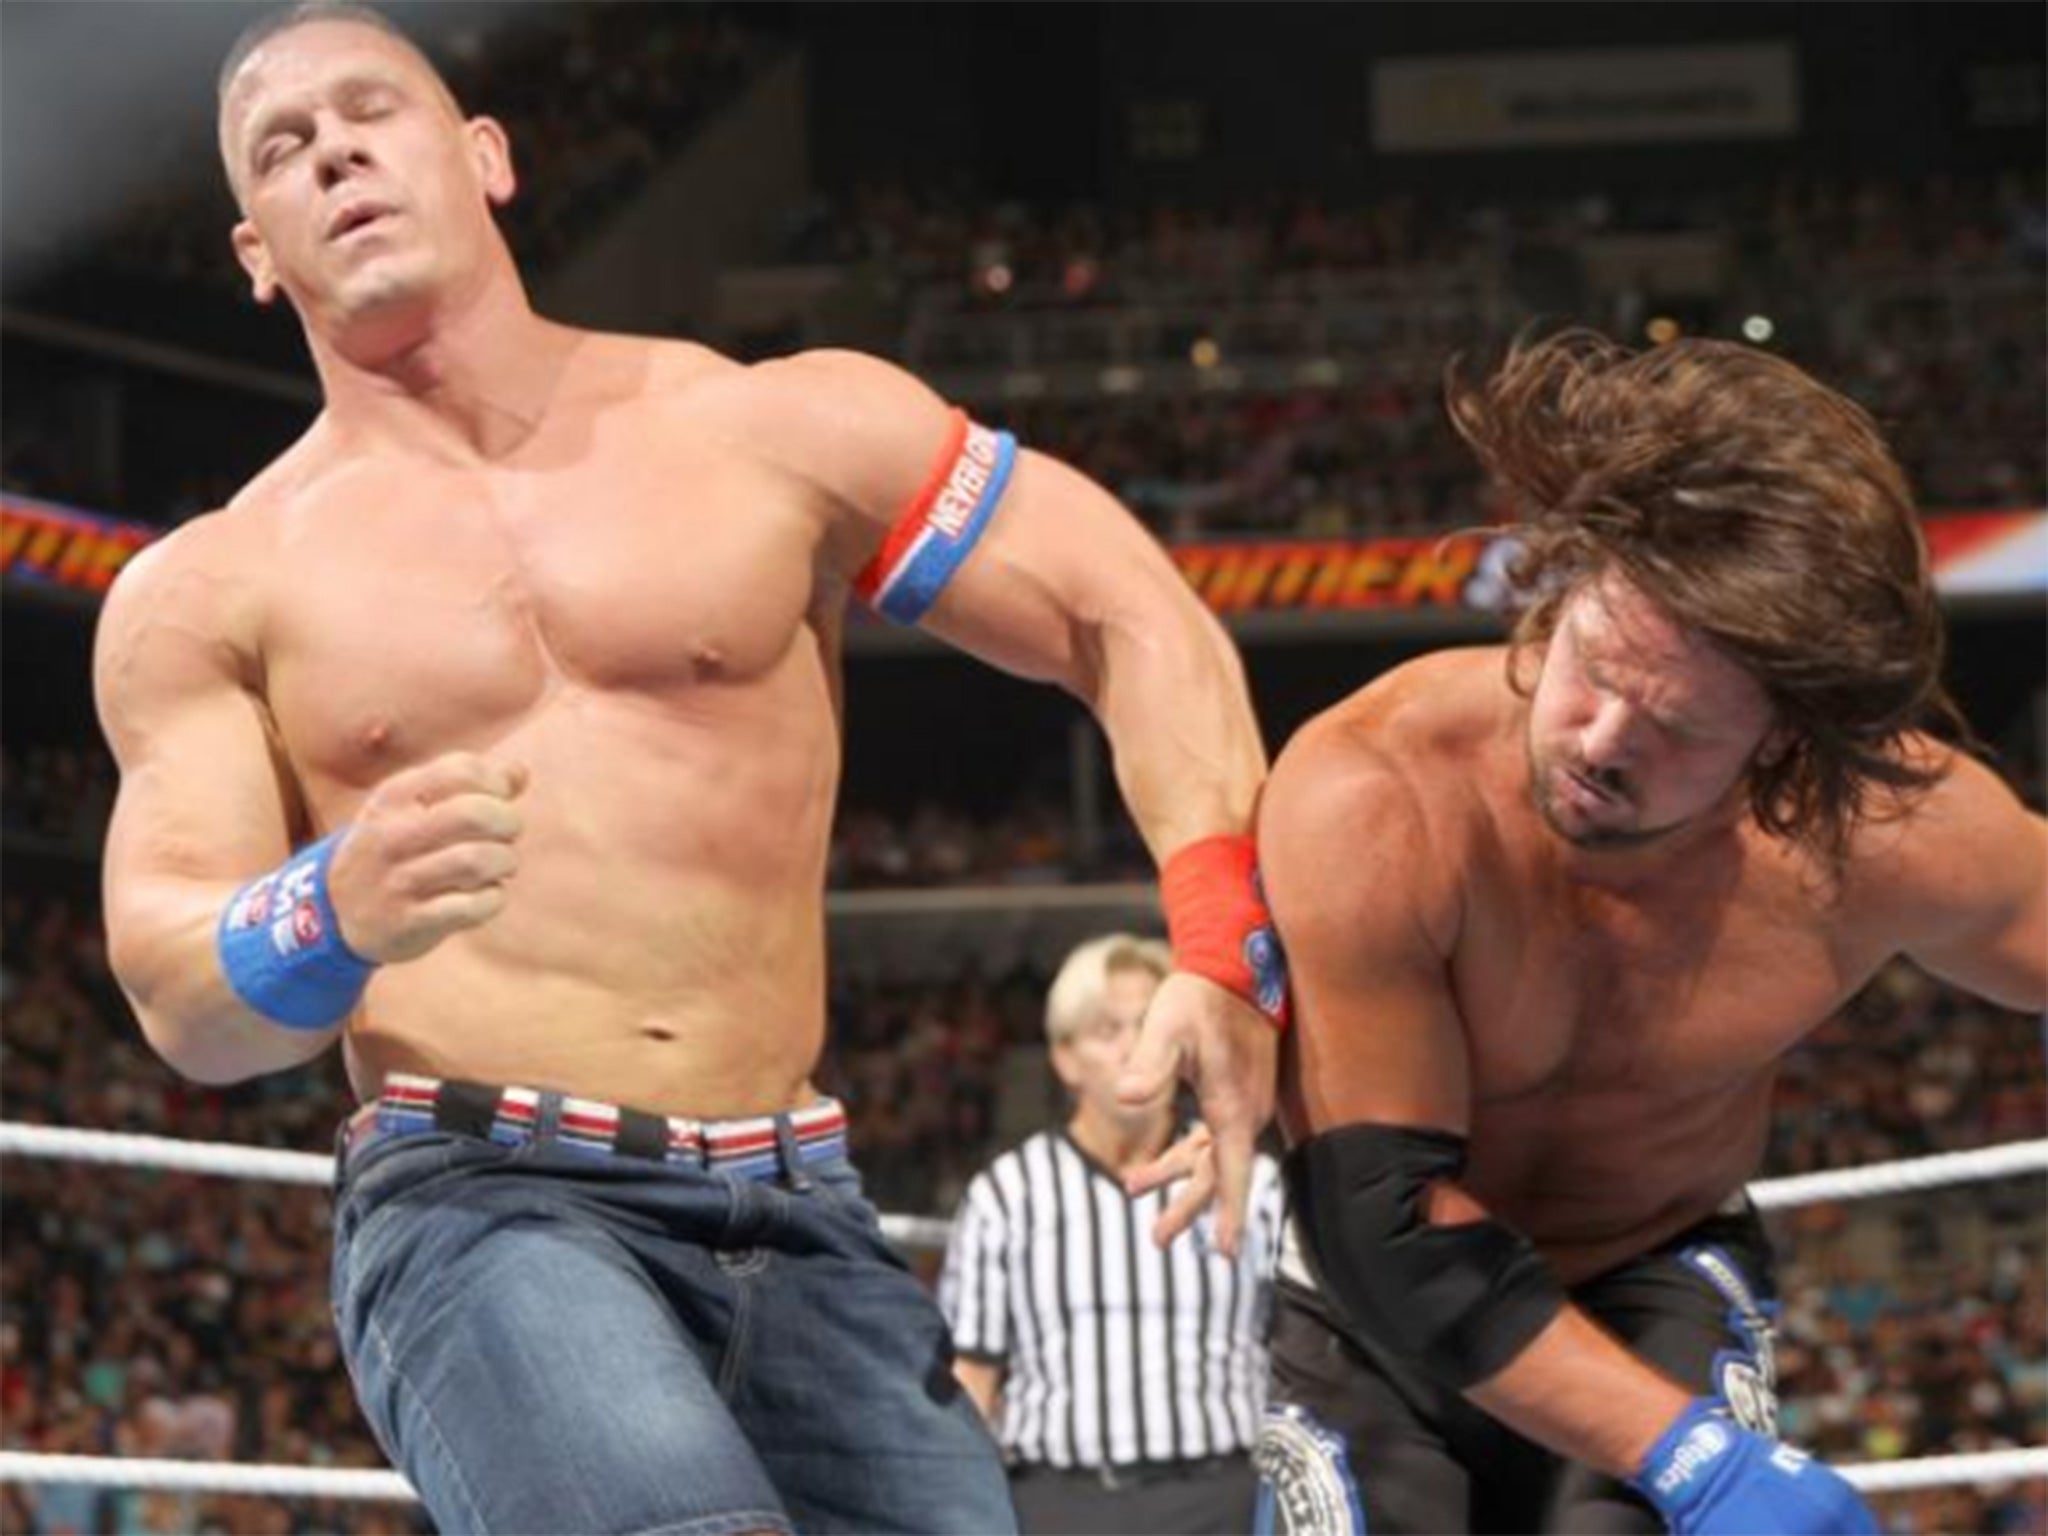 Wwe Summerslam Aj Styles And John Cena Shine While Brock